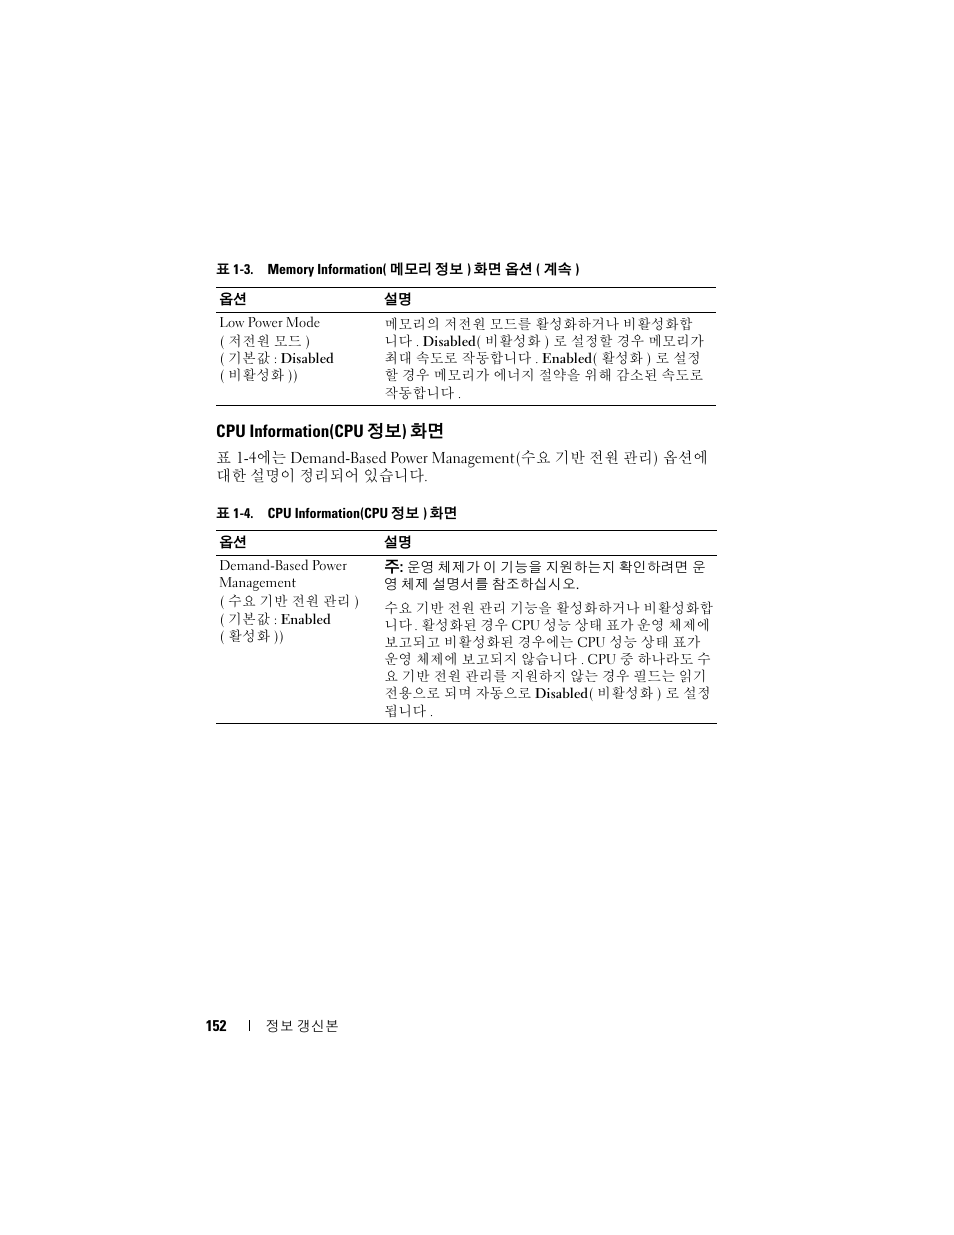 Cpu information(cpu 정보) 화면, Cpu information(cpu, 정보 ) 화면 | Dell POWEREDGE 2950 User Manual | Page 152 / 186